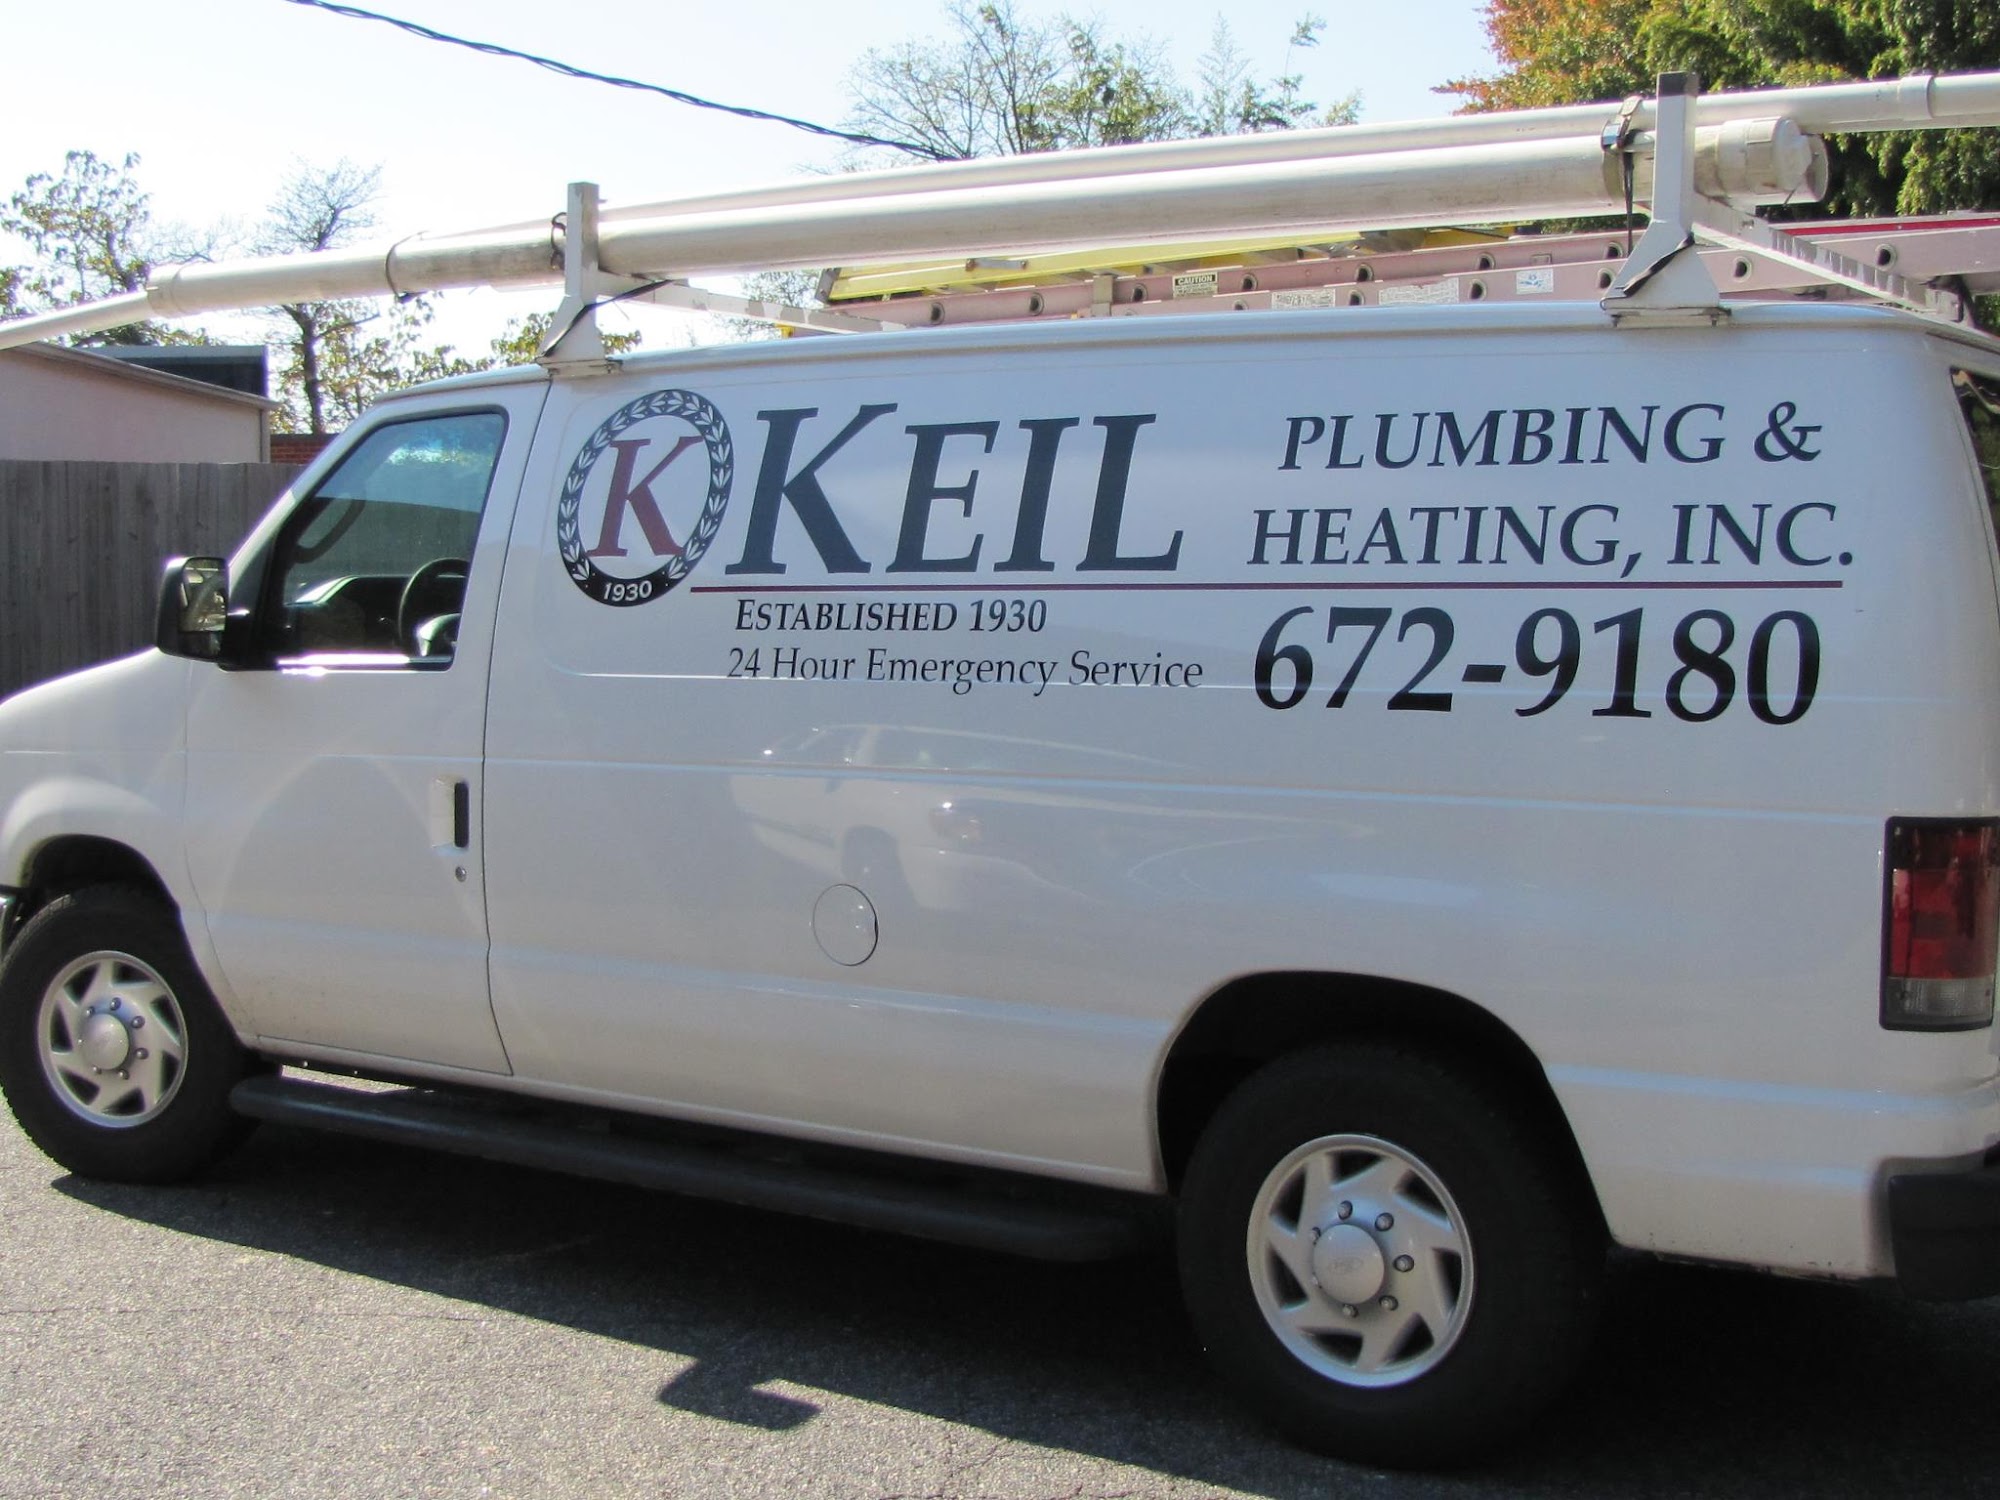 Keil Plumbing & Heating Inc